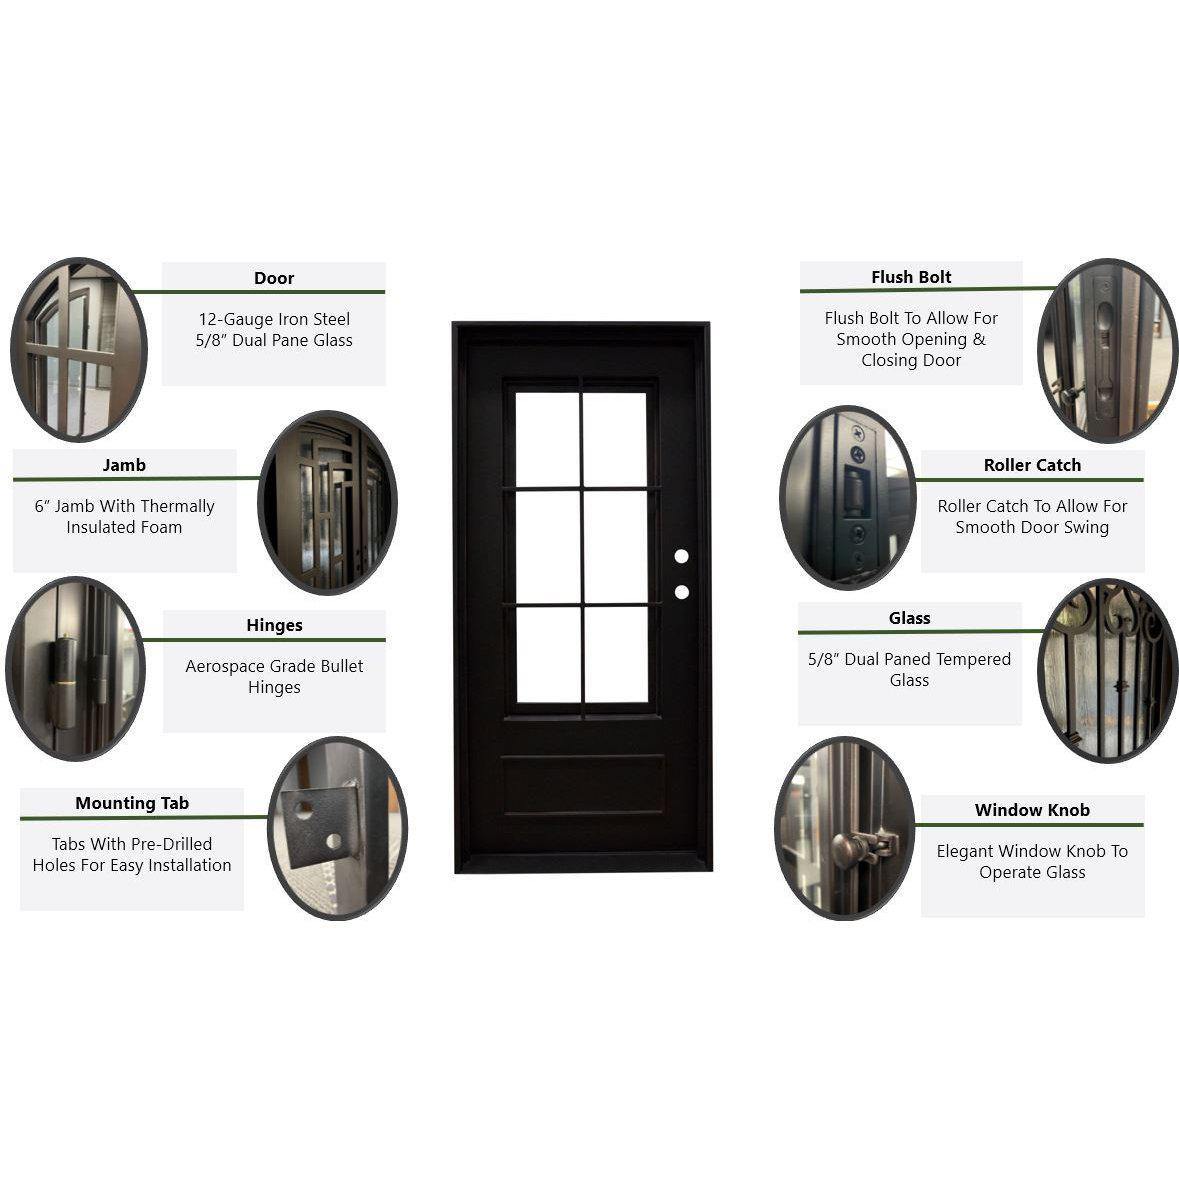 Pre-Order Keystone-Wrought Iron Doors-Black Diamond Iron Doors